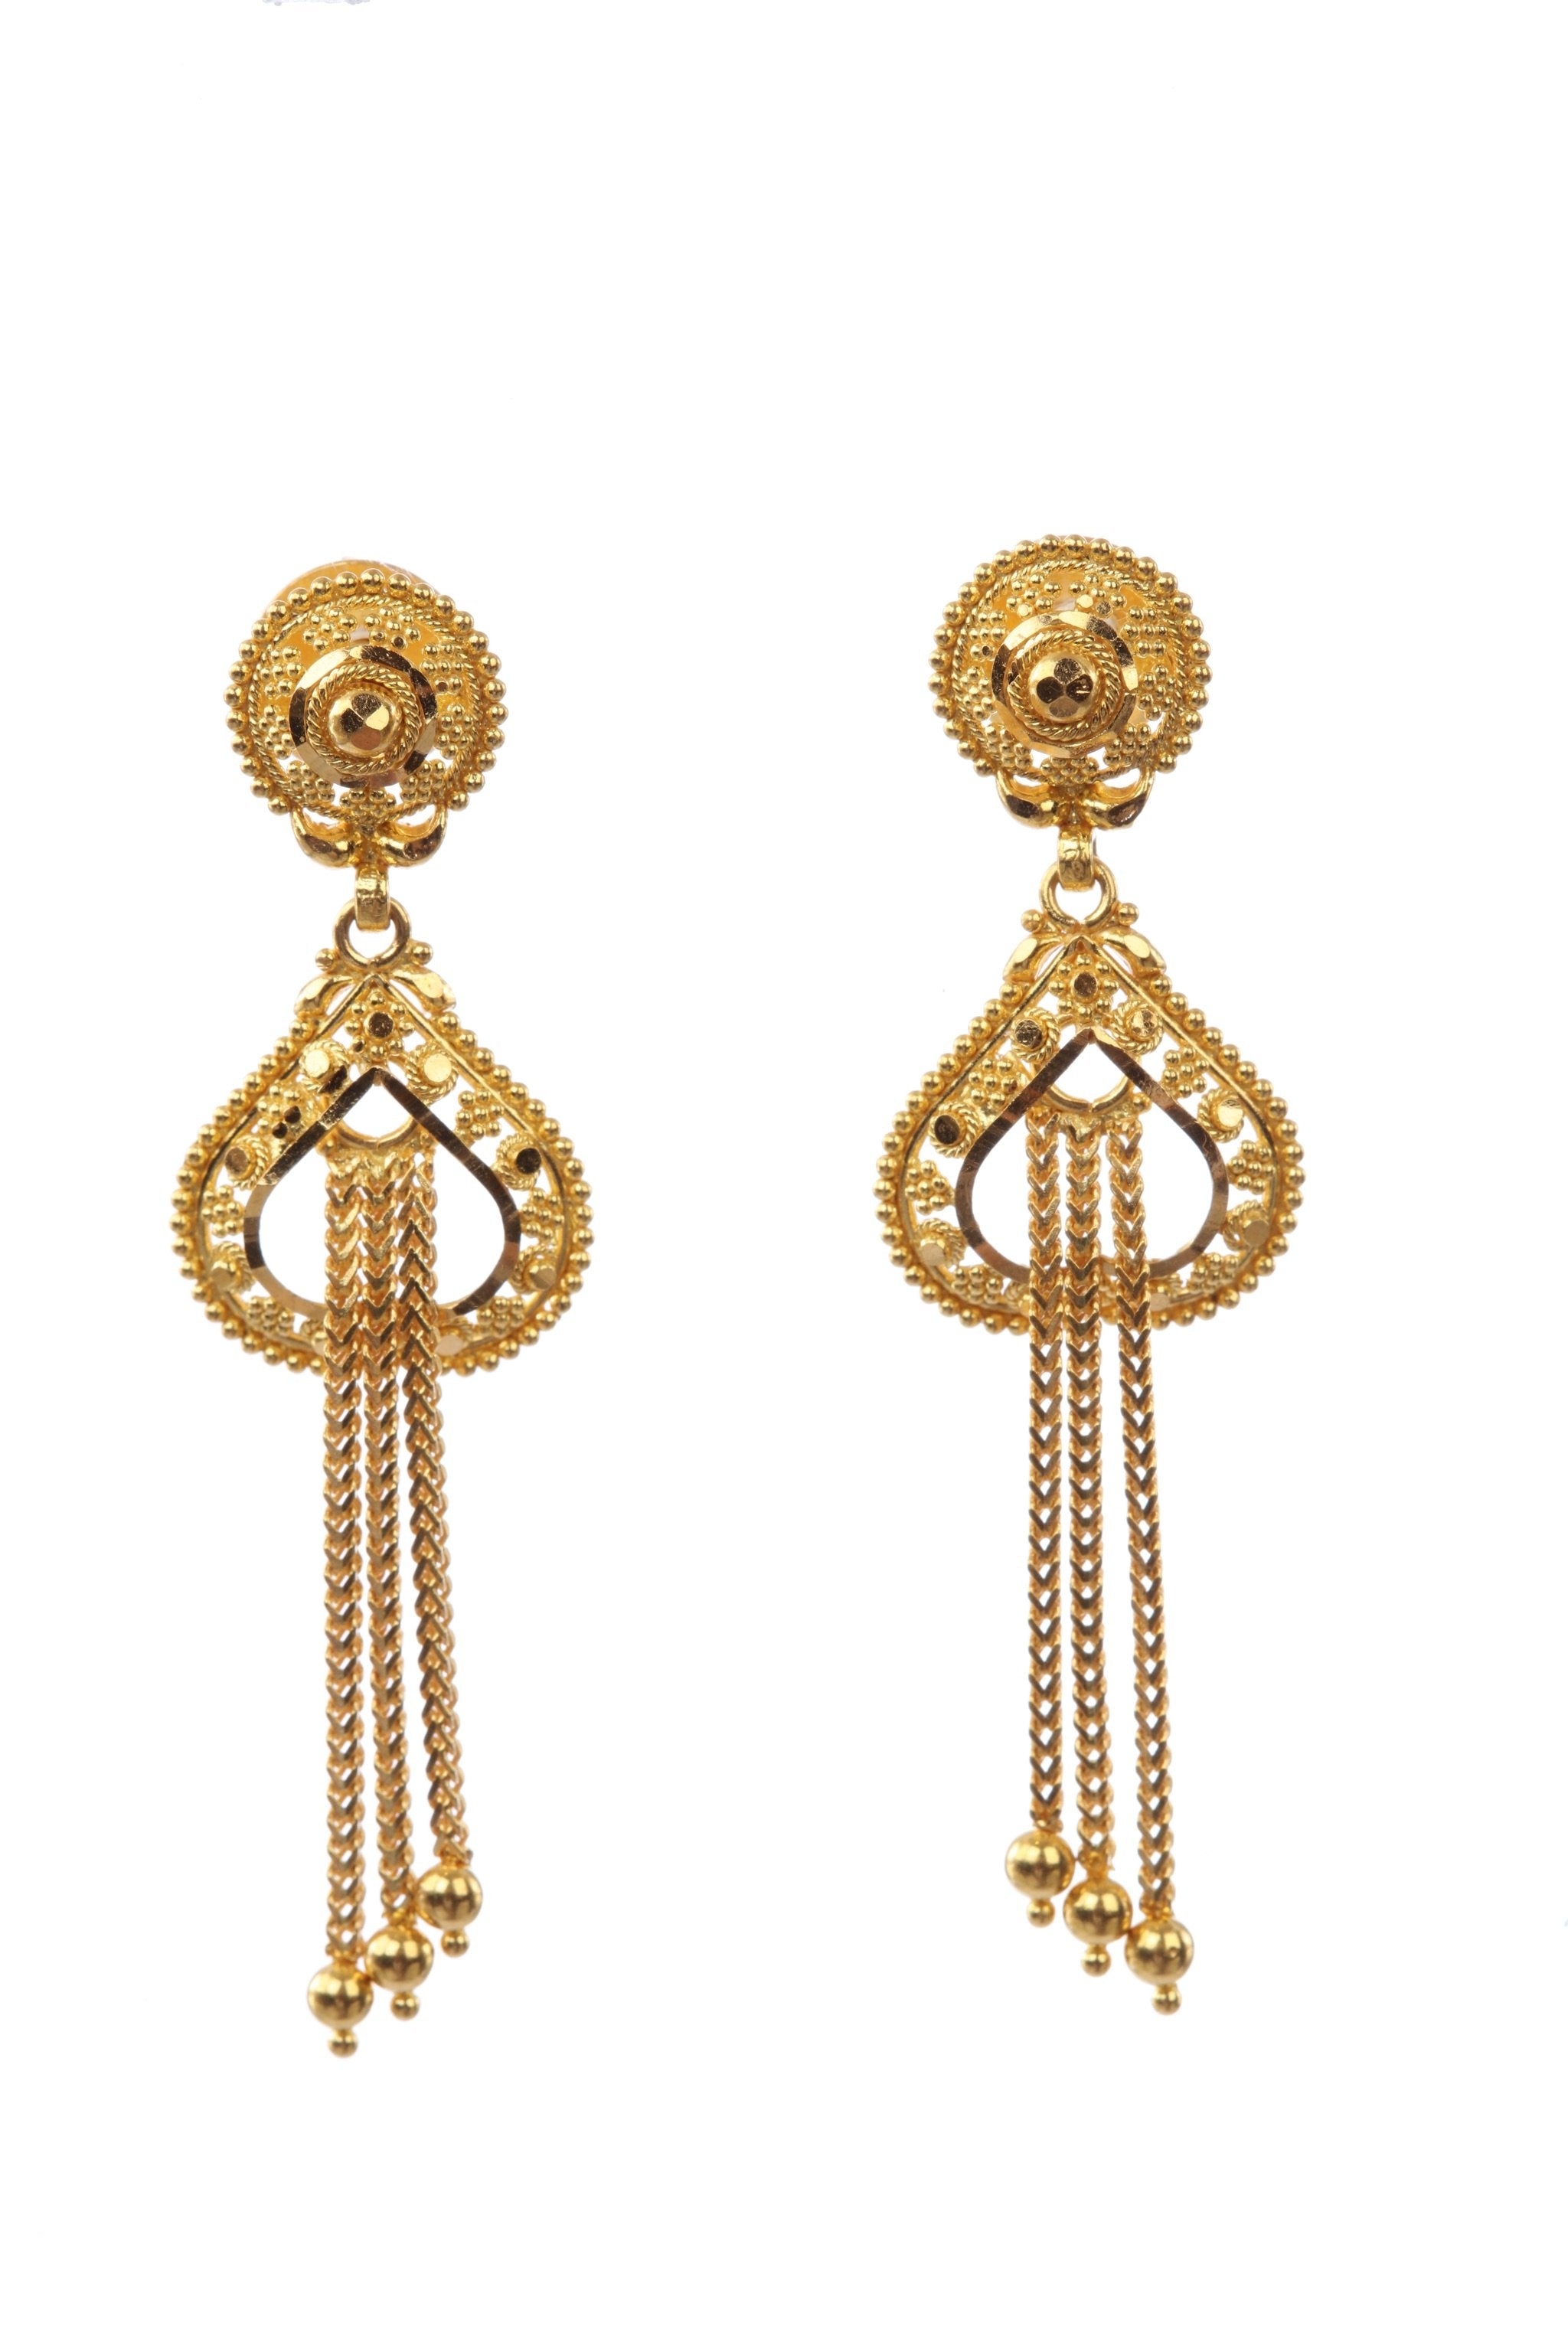 Dubai Gold Earrings For Women Men 24k Color Ethiopian Earring African  Jewelry Saudi Arabic Wedding Bride Gift - Dangle Earrings - AliExpress